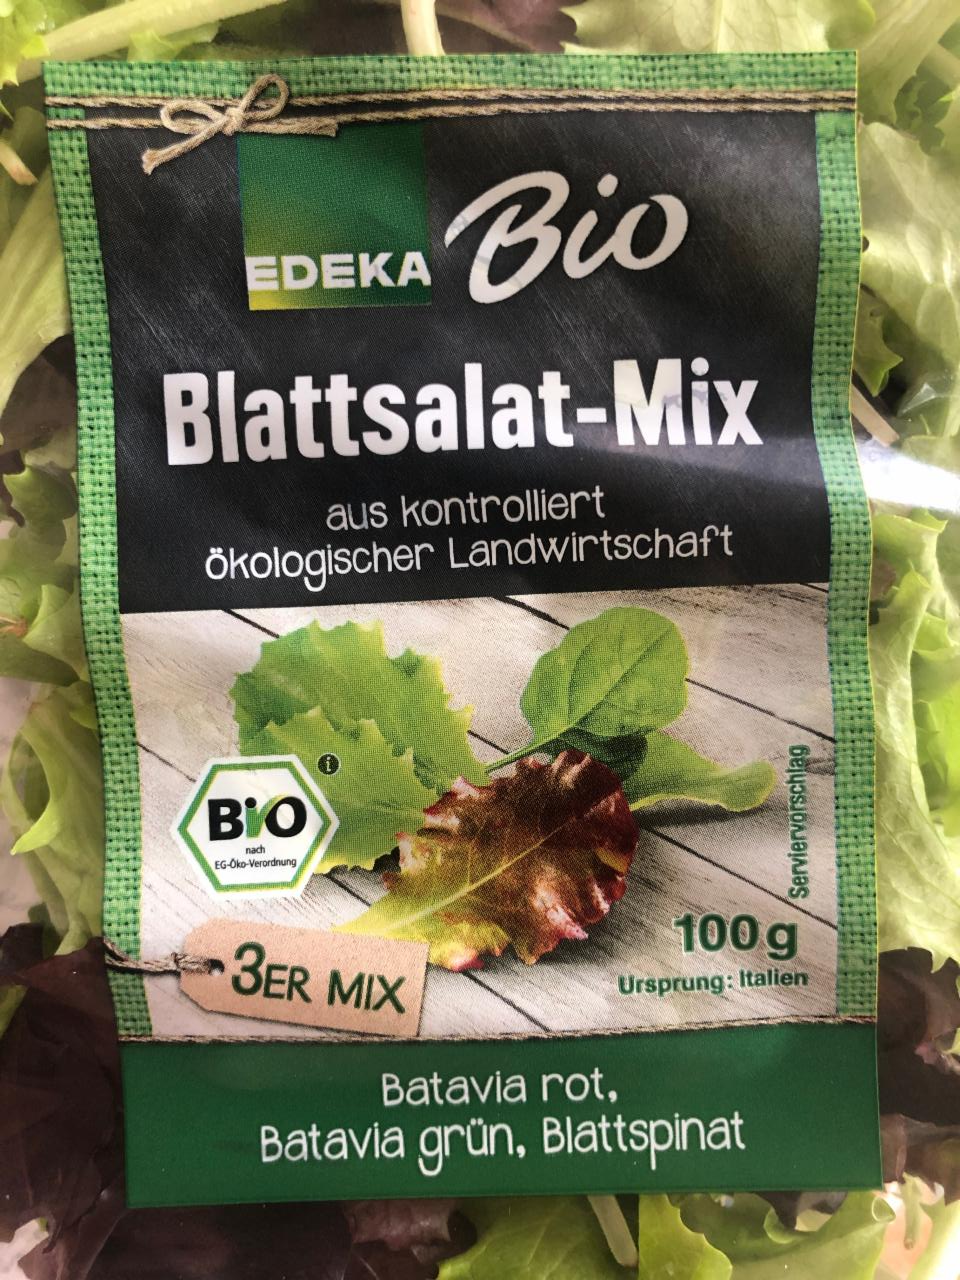 Fotografie - Blattsalat-Mix Batavia rot, Batavia grün, Blattspinat Edeka Bio